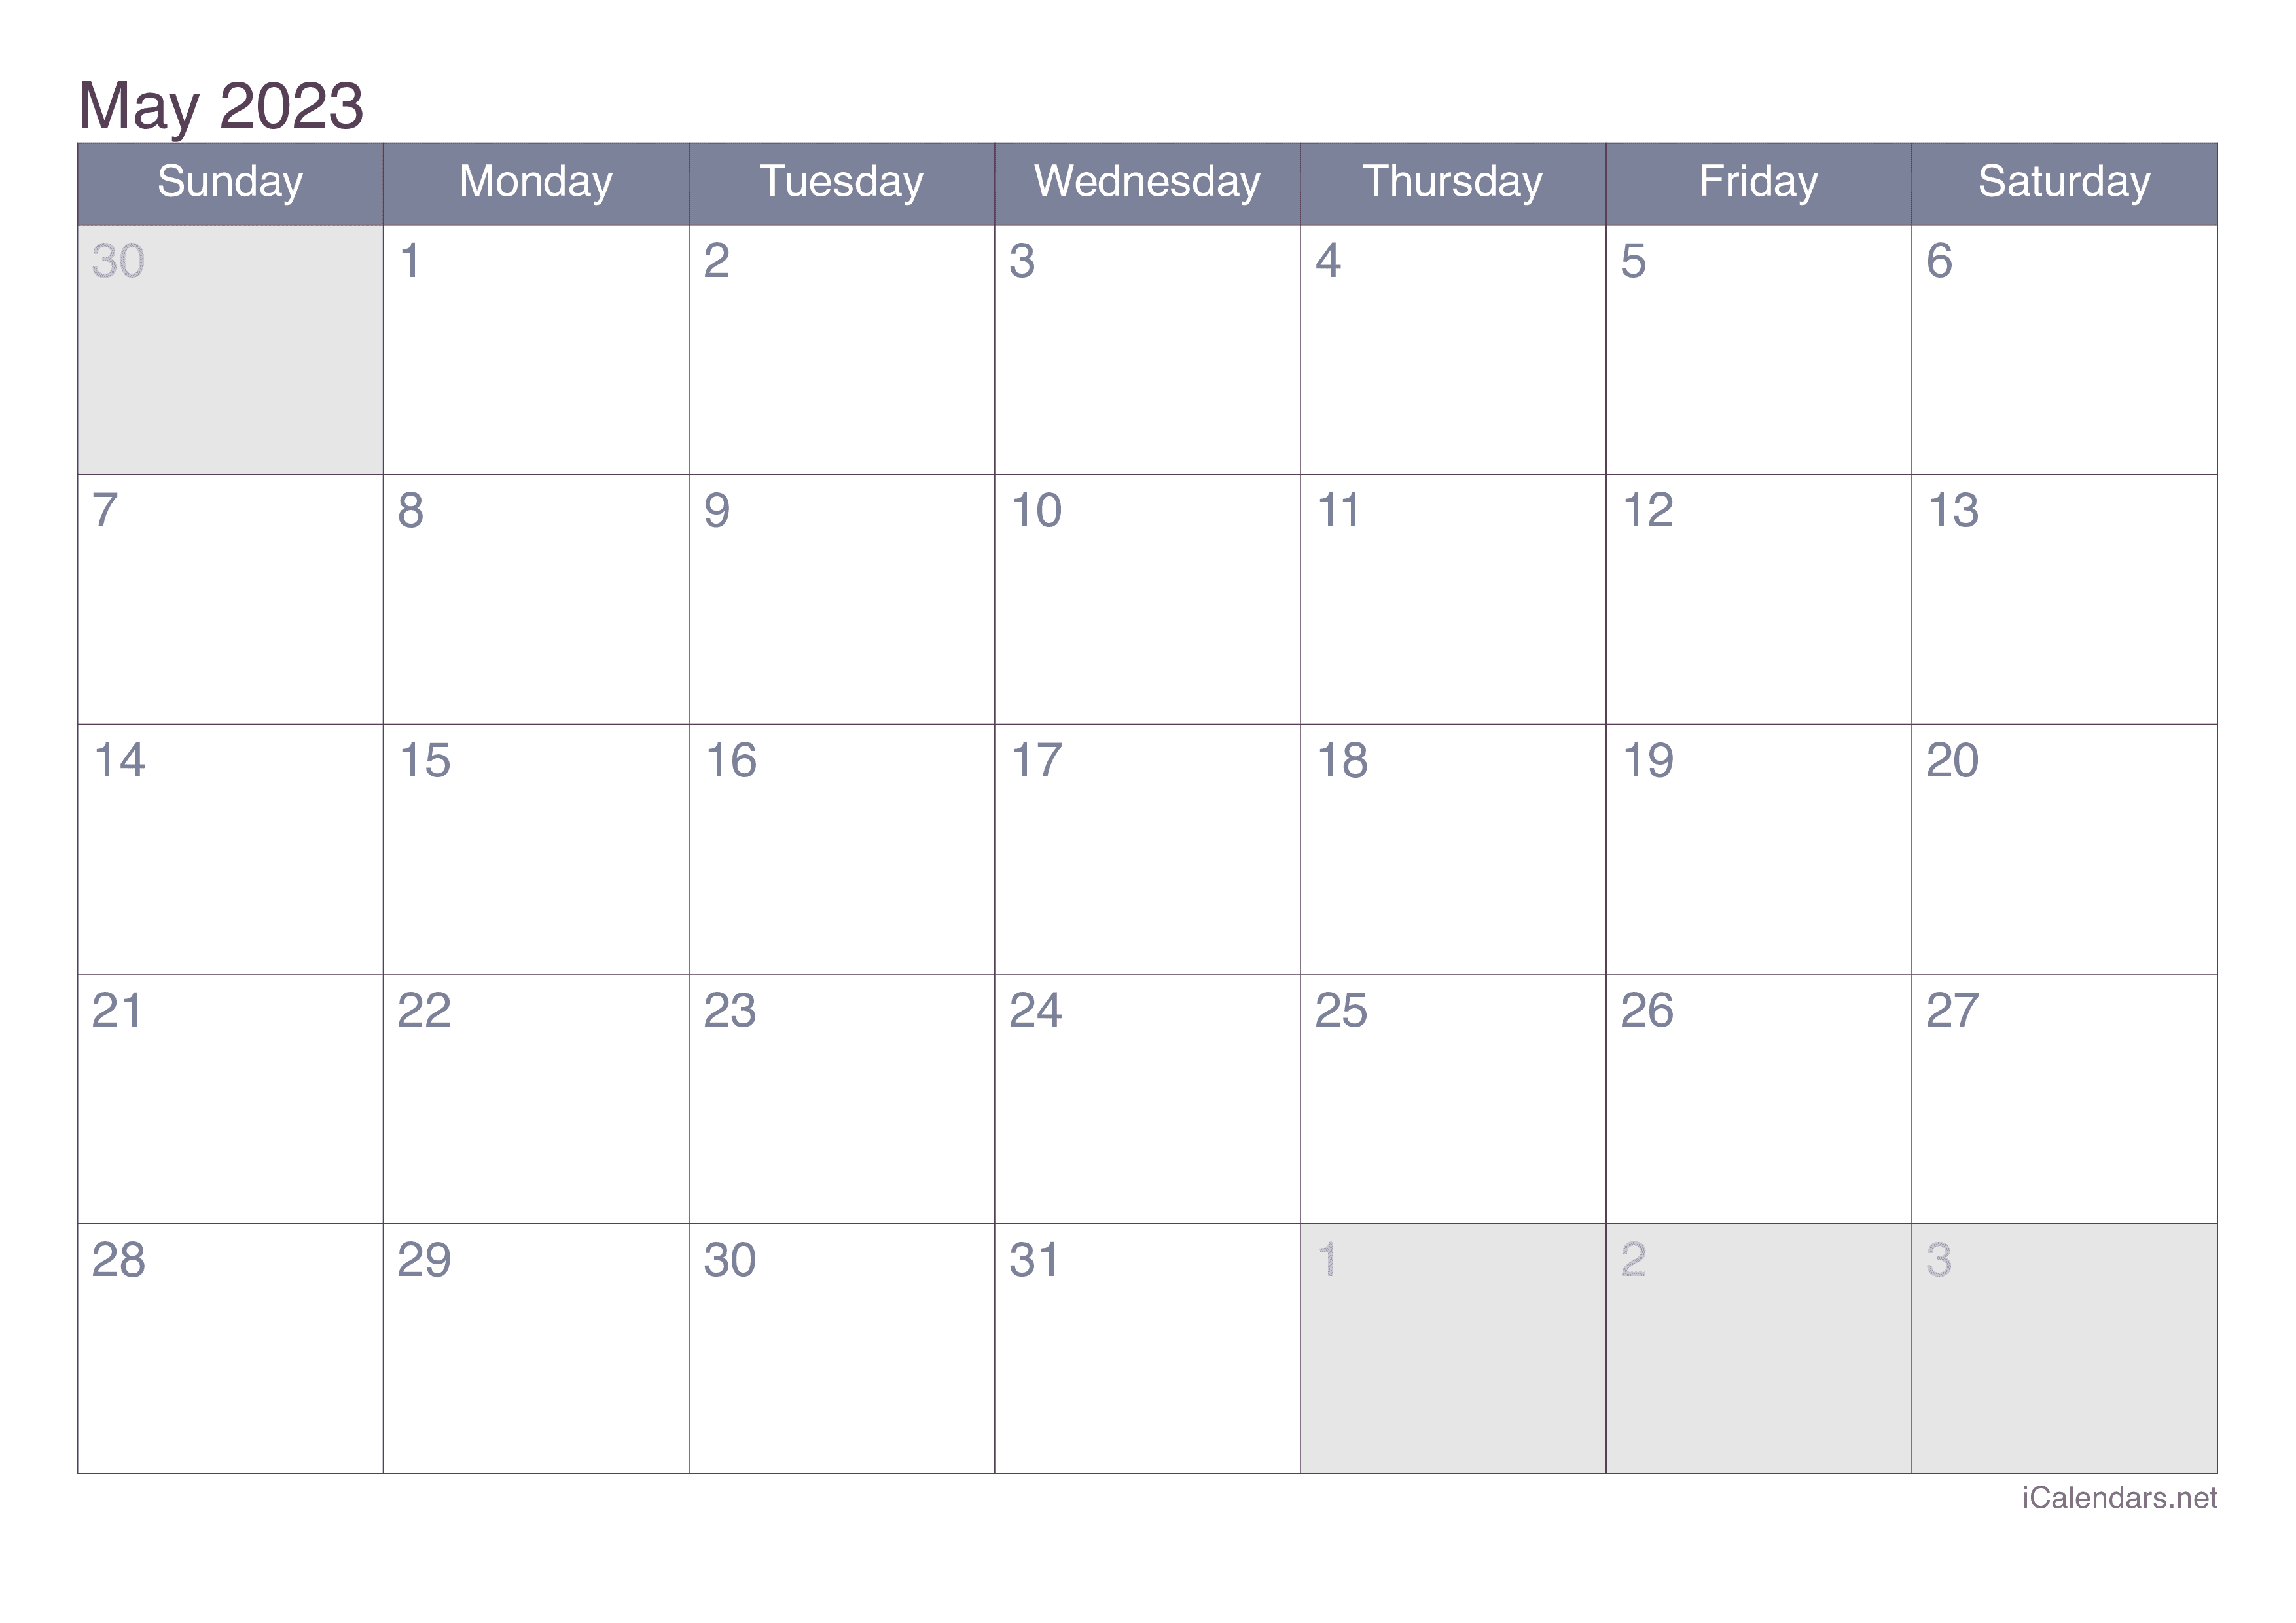 May 2023 Printable Calendar - icalendars.net